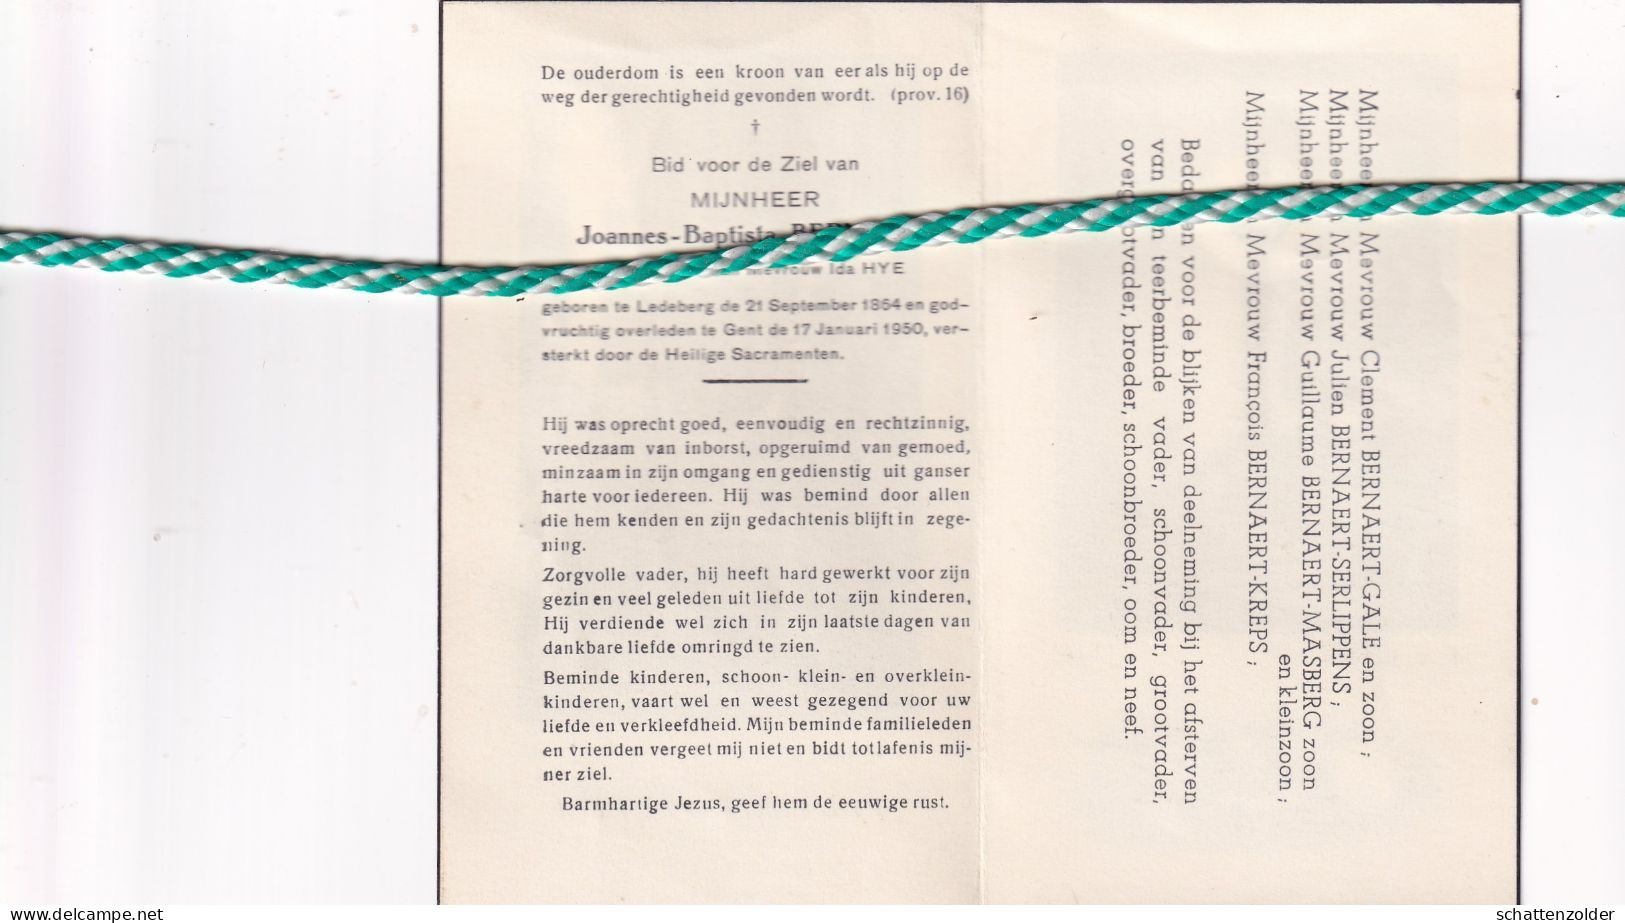 Joannes Baptista Bernaert-Hye, Ledeberg 1864, Gent 1950 - Obituary Notices